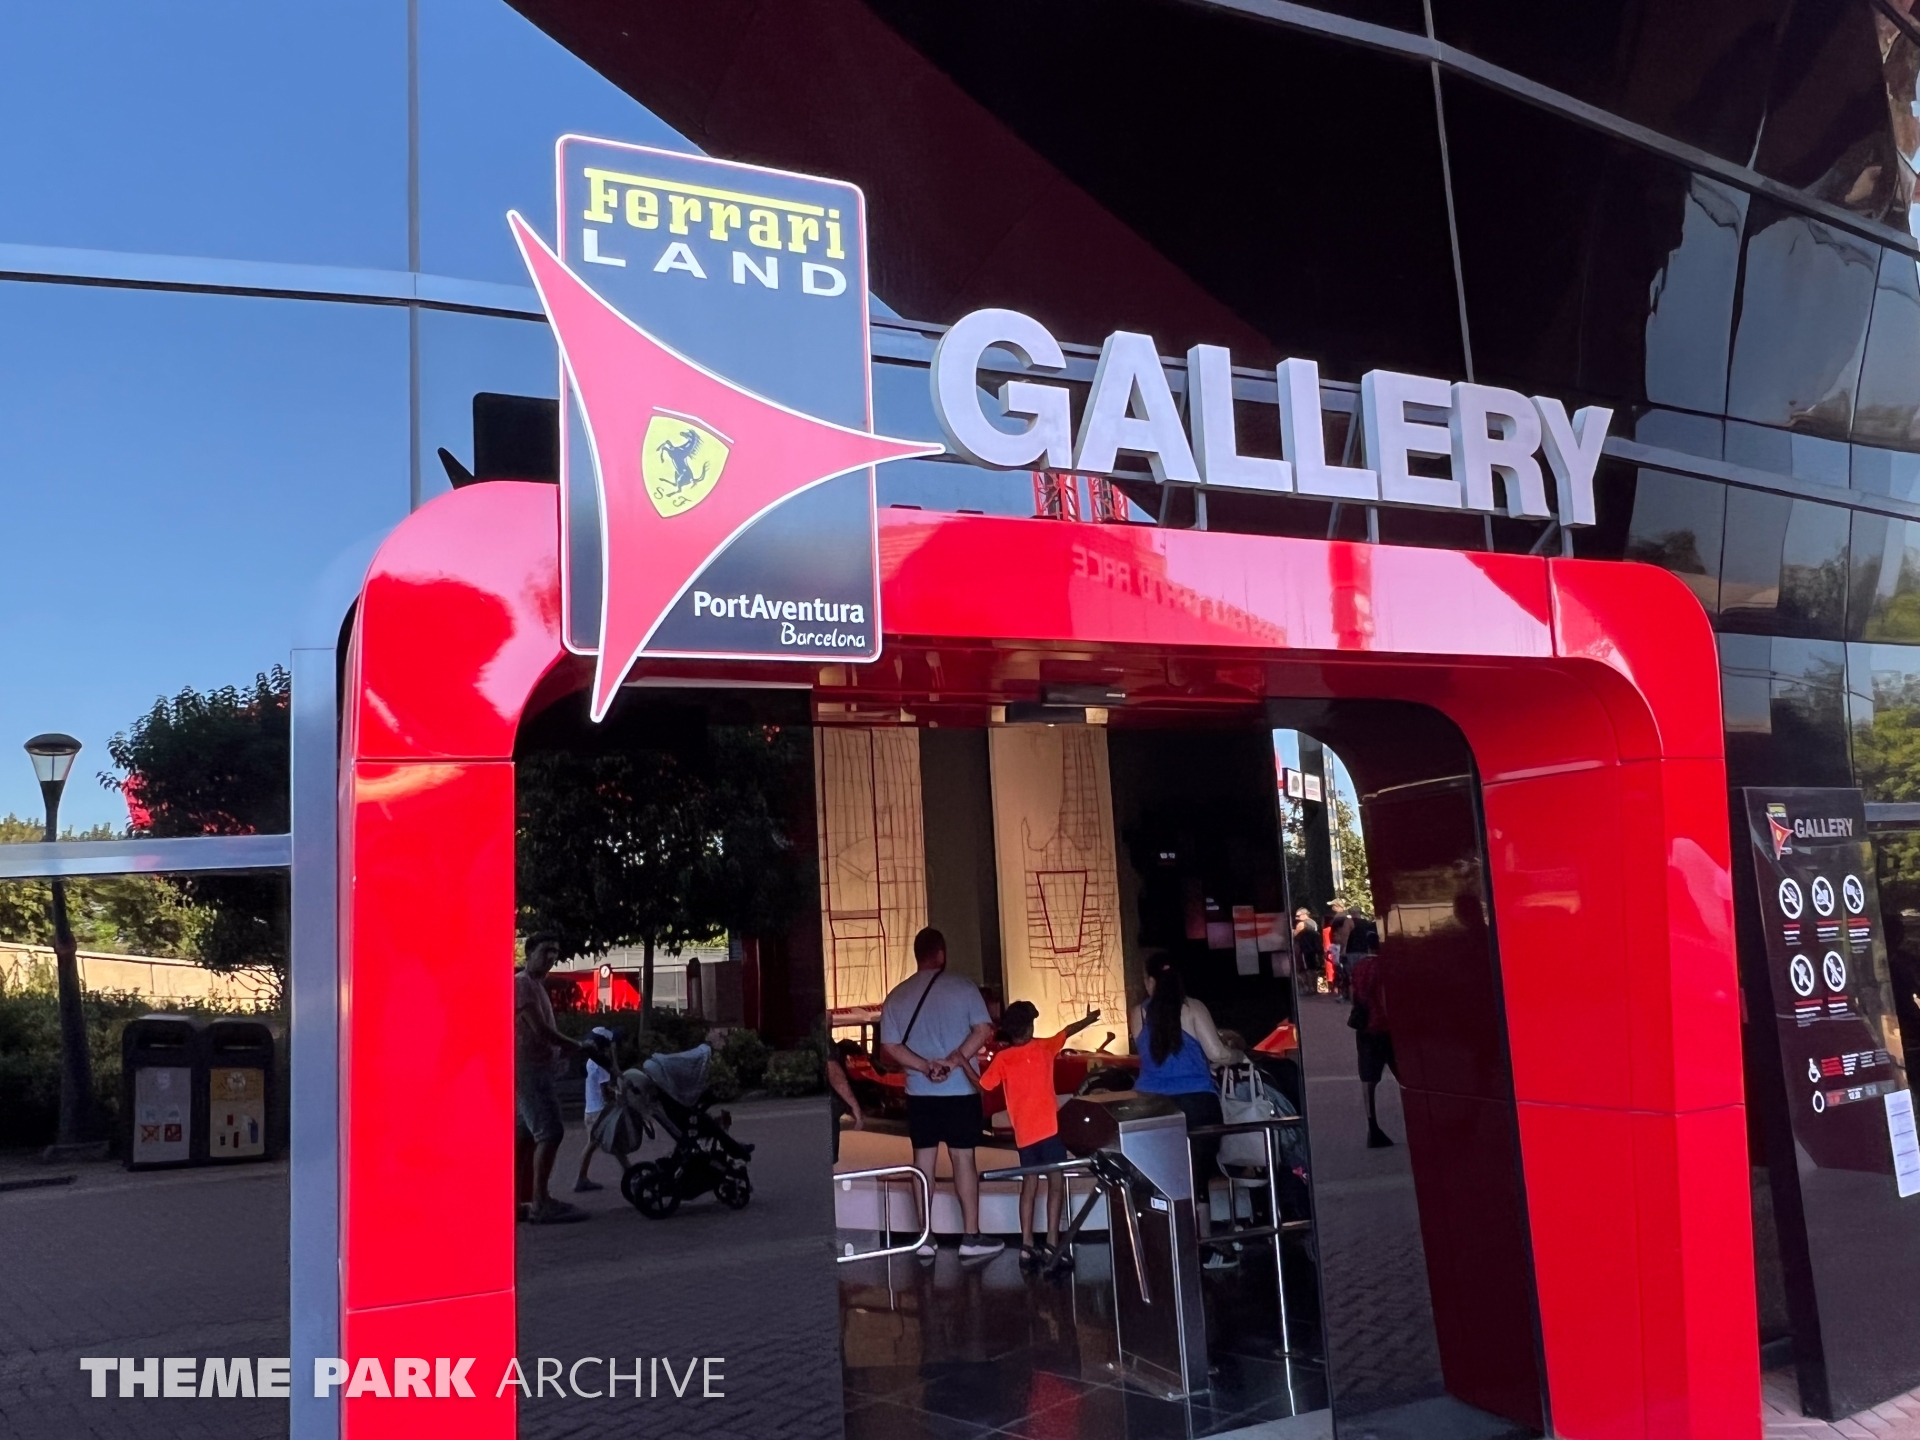 FerrariLand Gallery at Ferrari Land